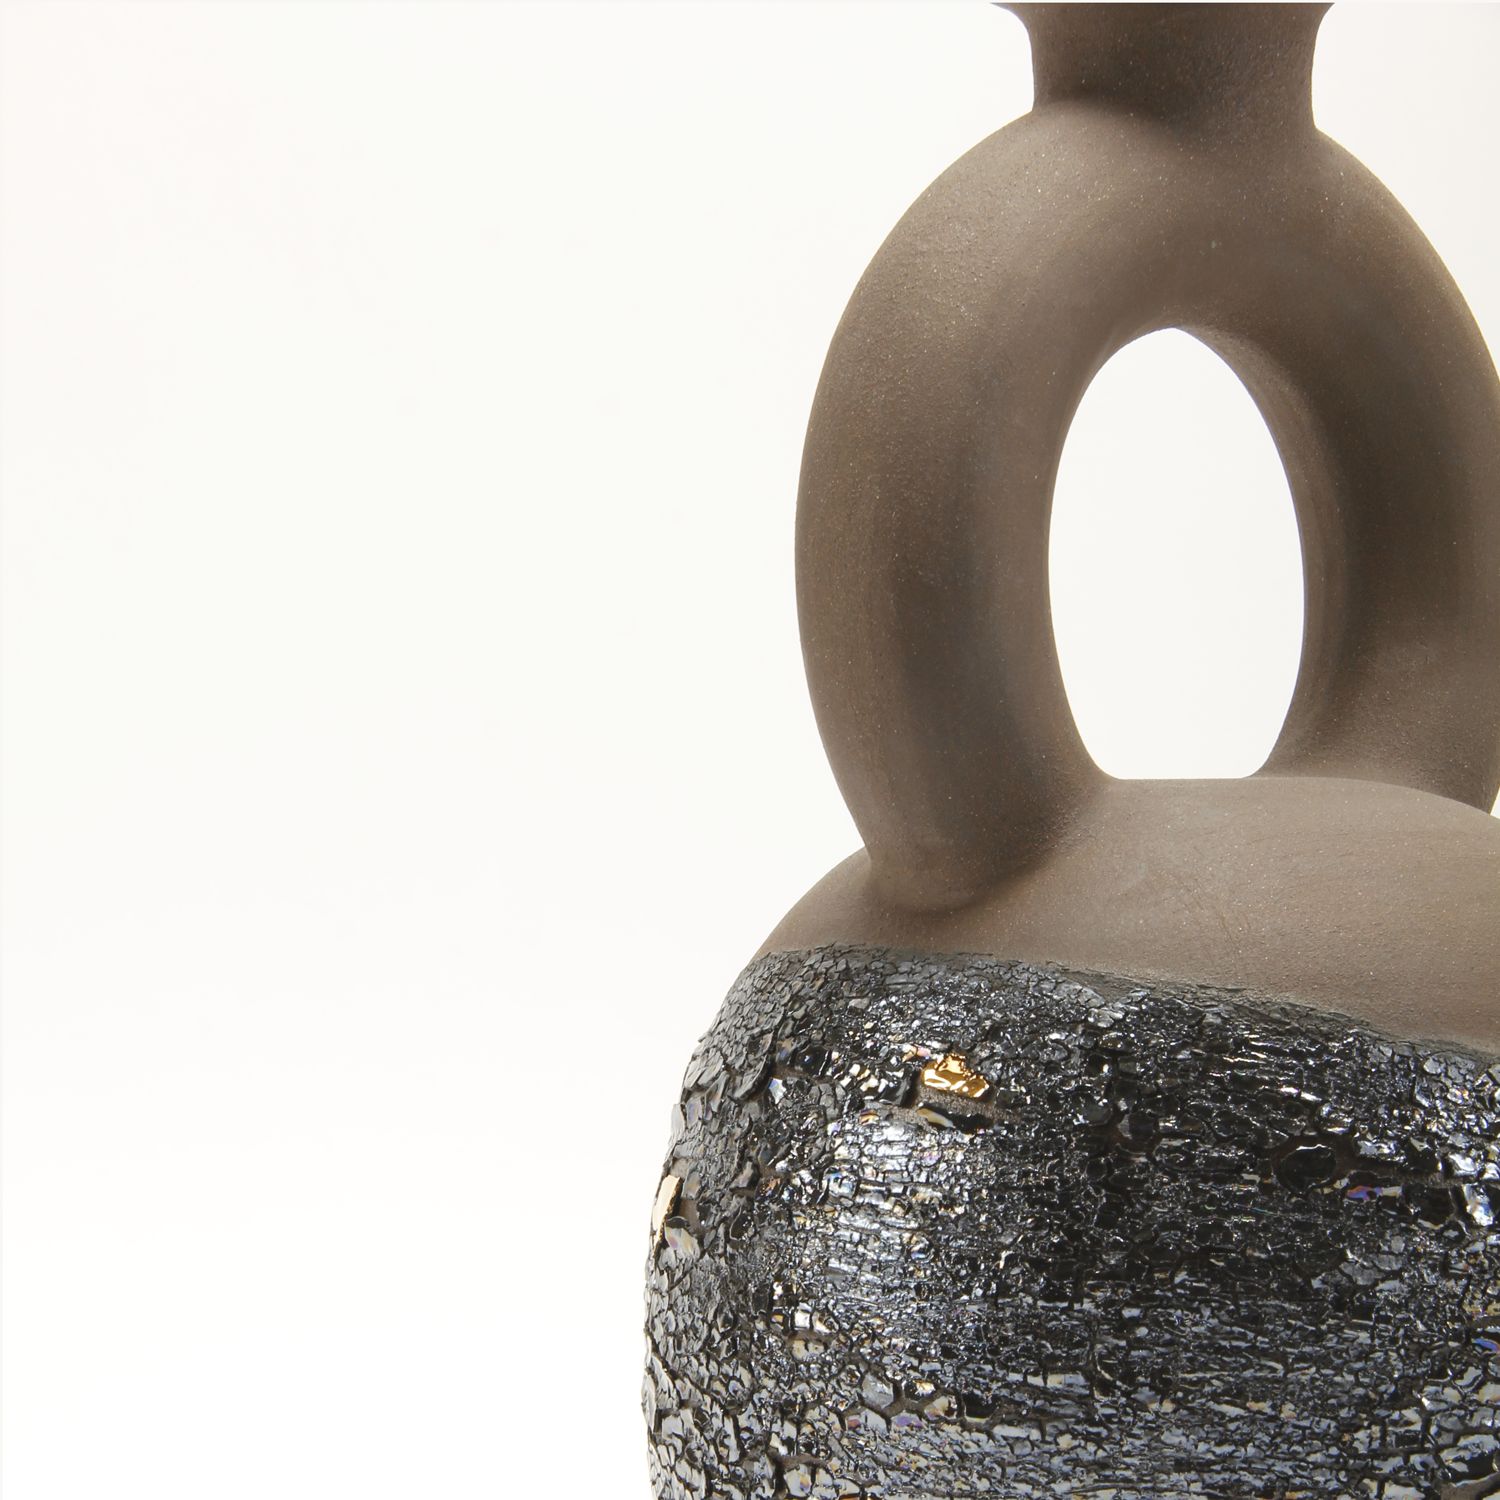 Cuir Ceramics: Large Brown Vessel Product Image 2 of 3